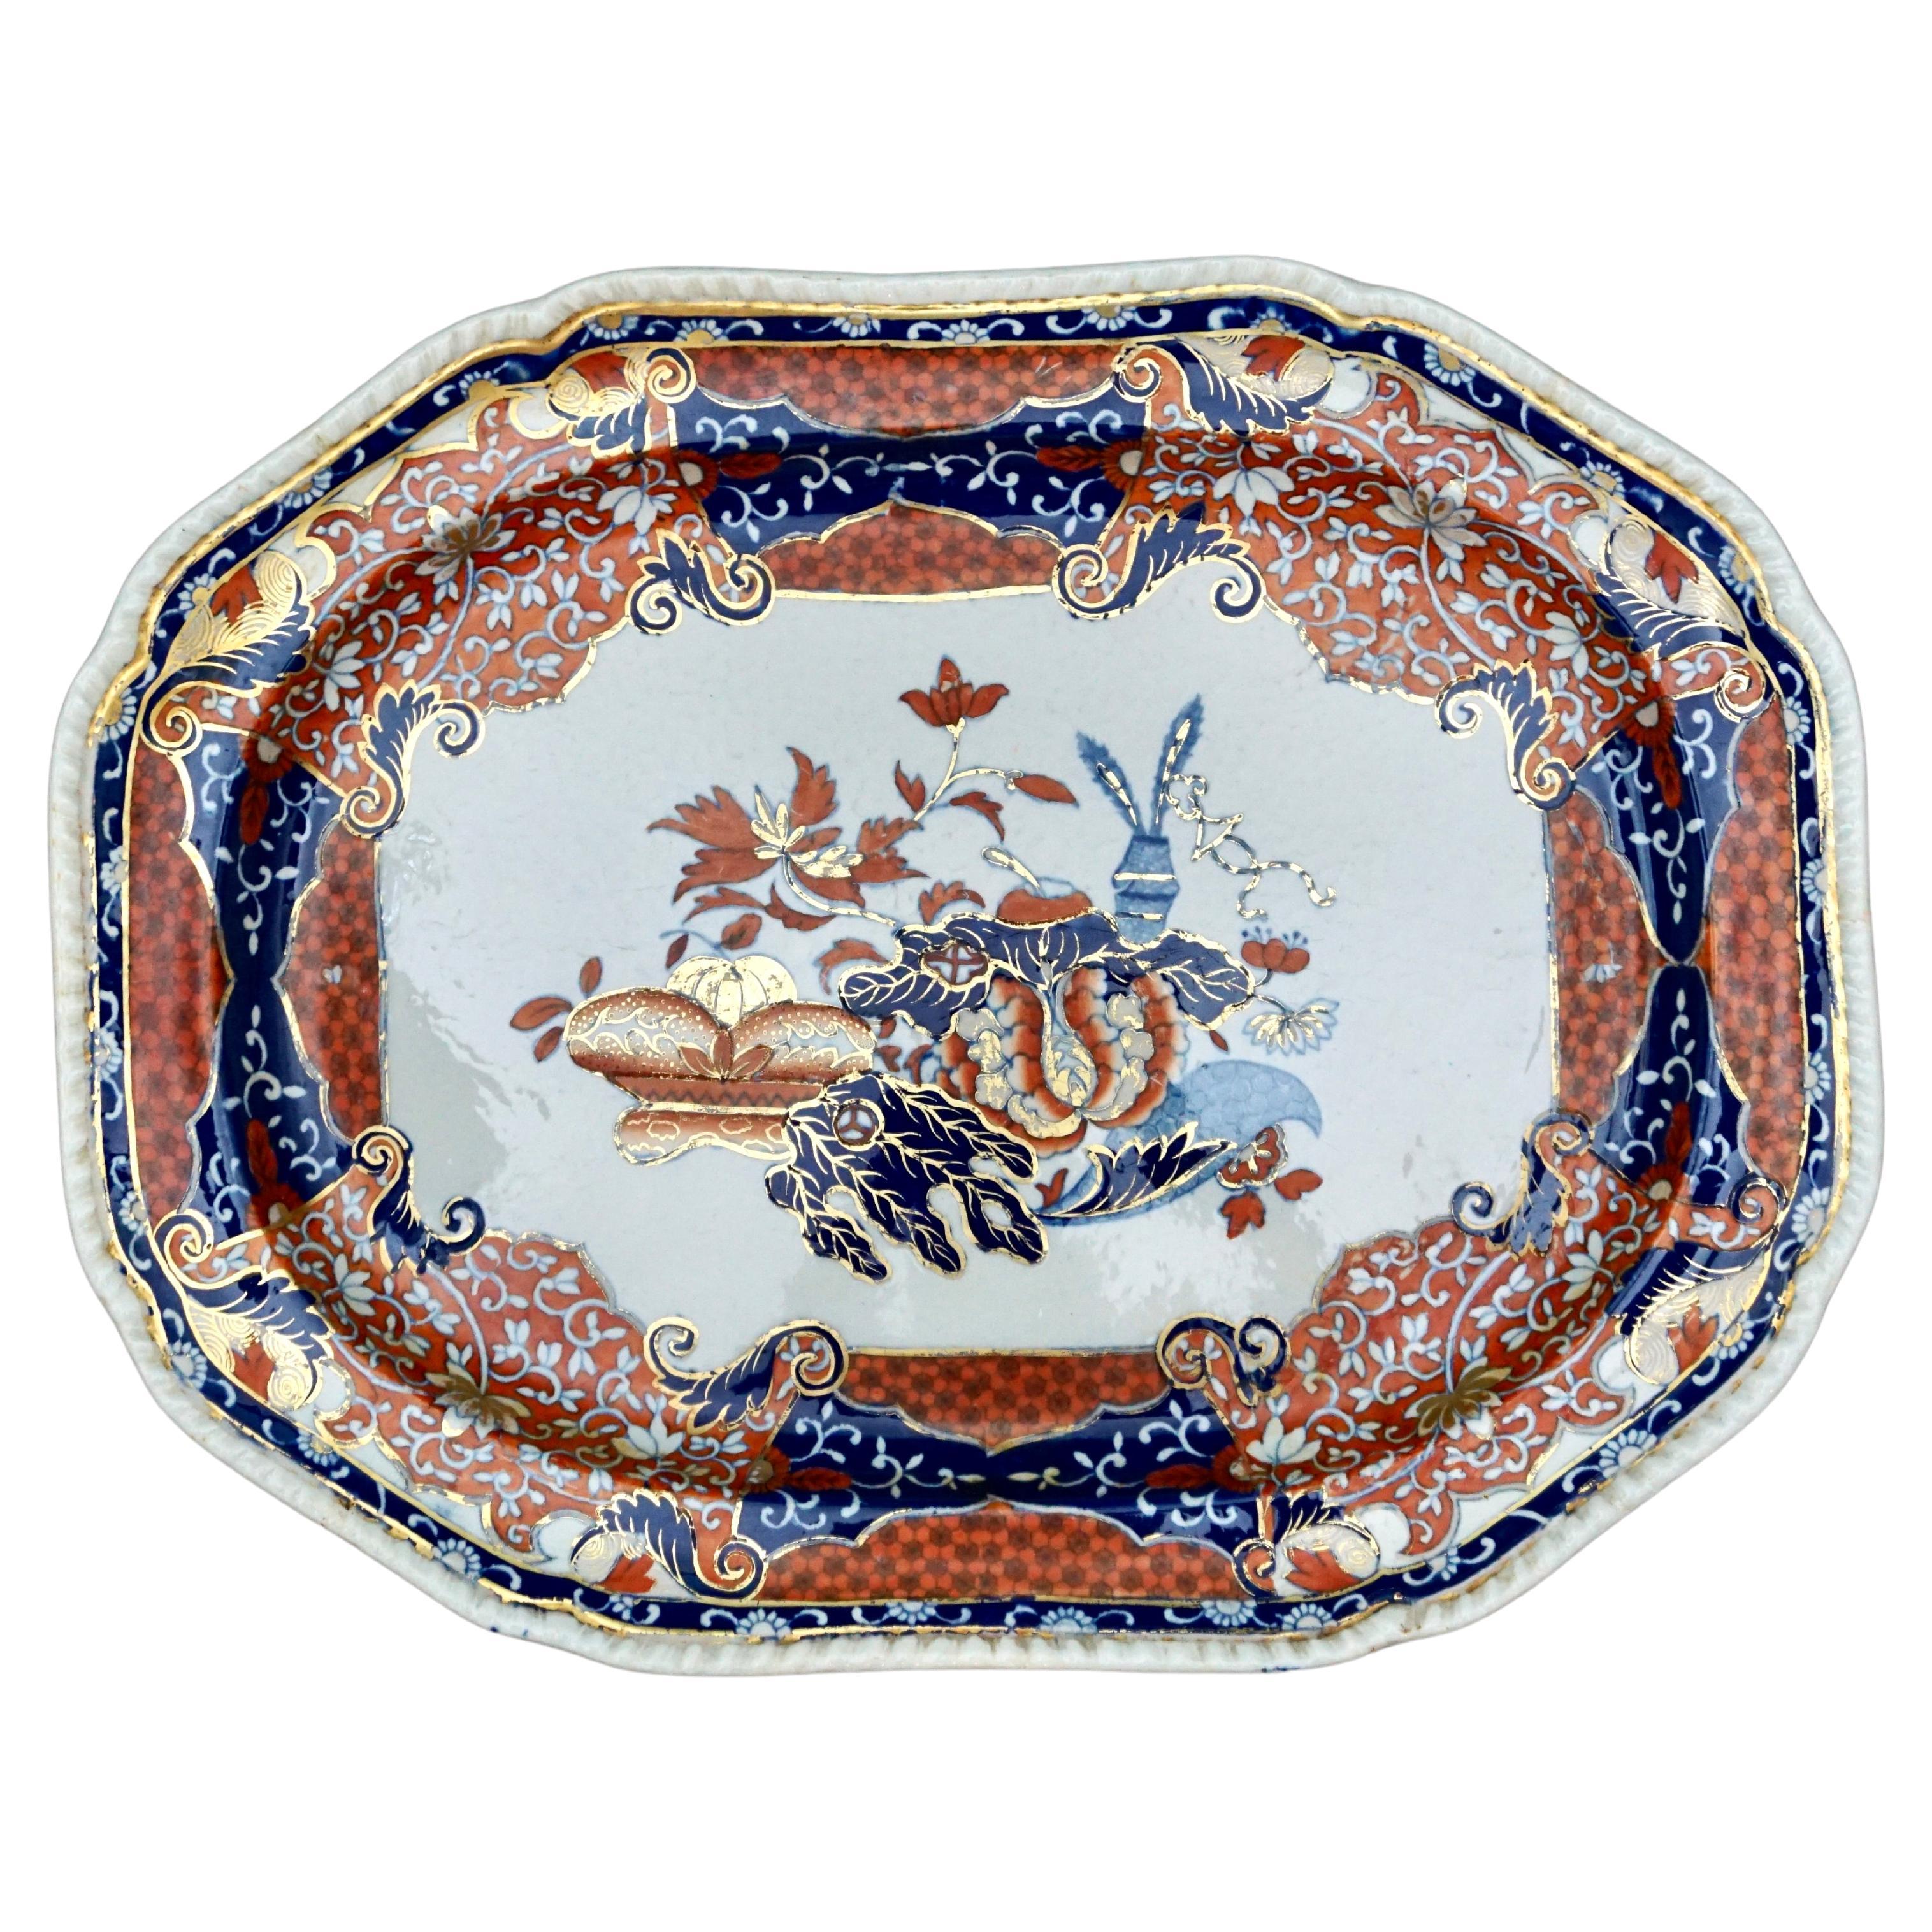 Spode Porcelain Parcel Gilt Platter of Large Size in the Imari Palette